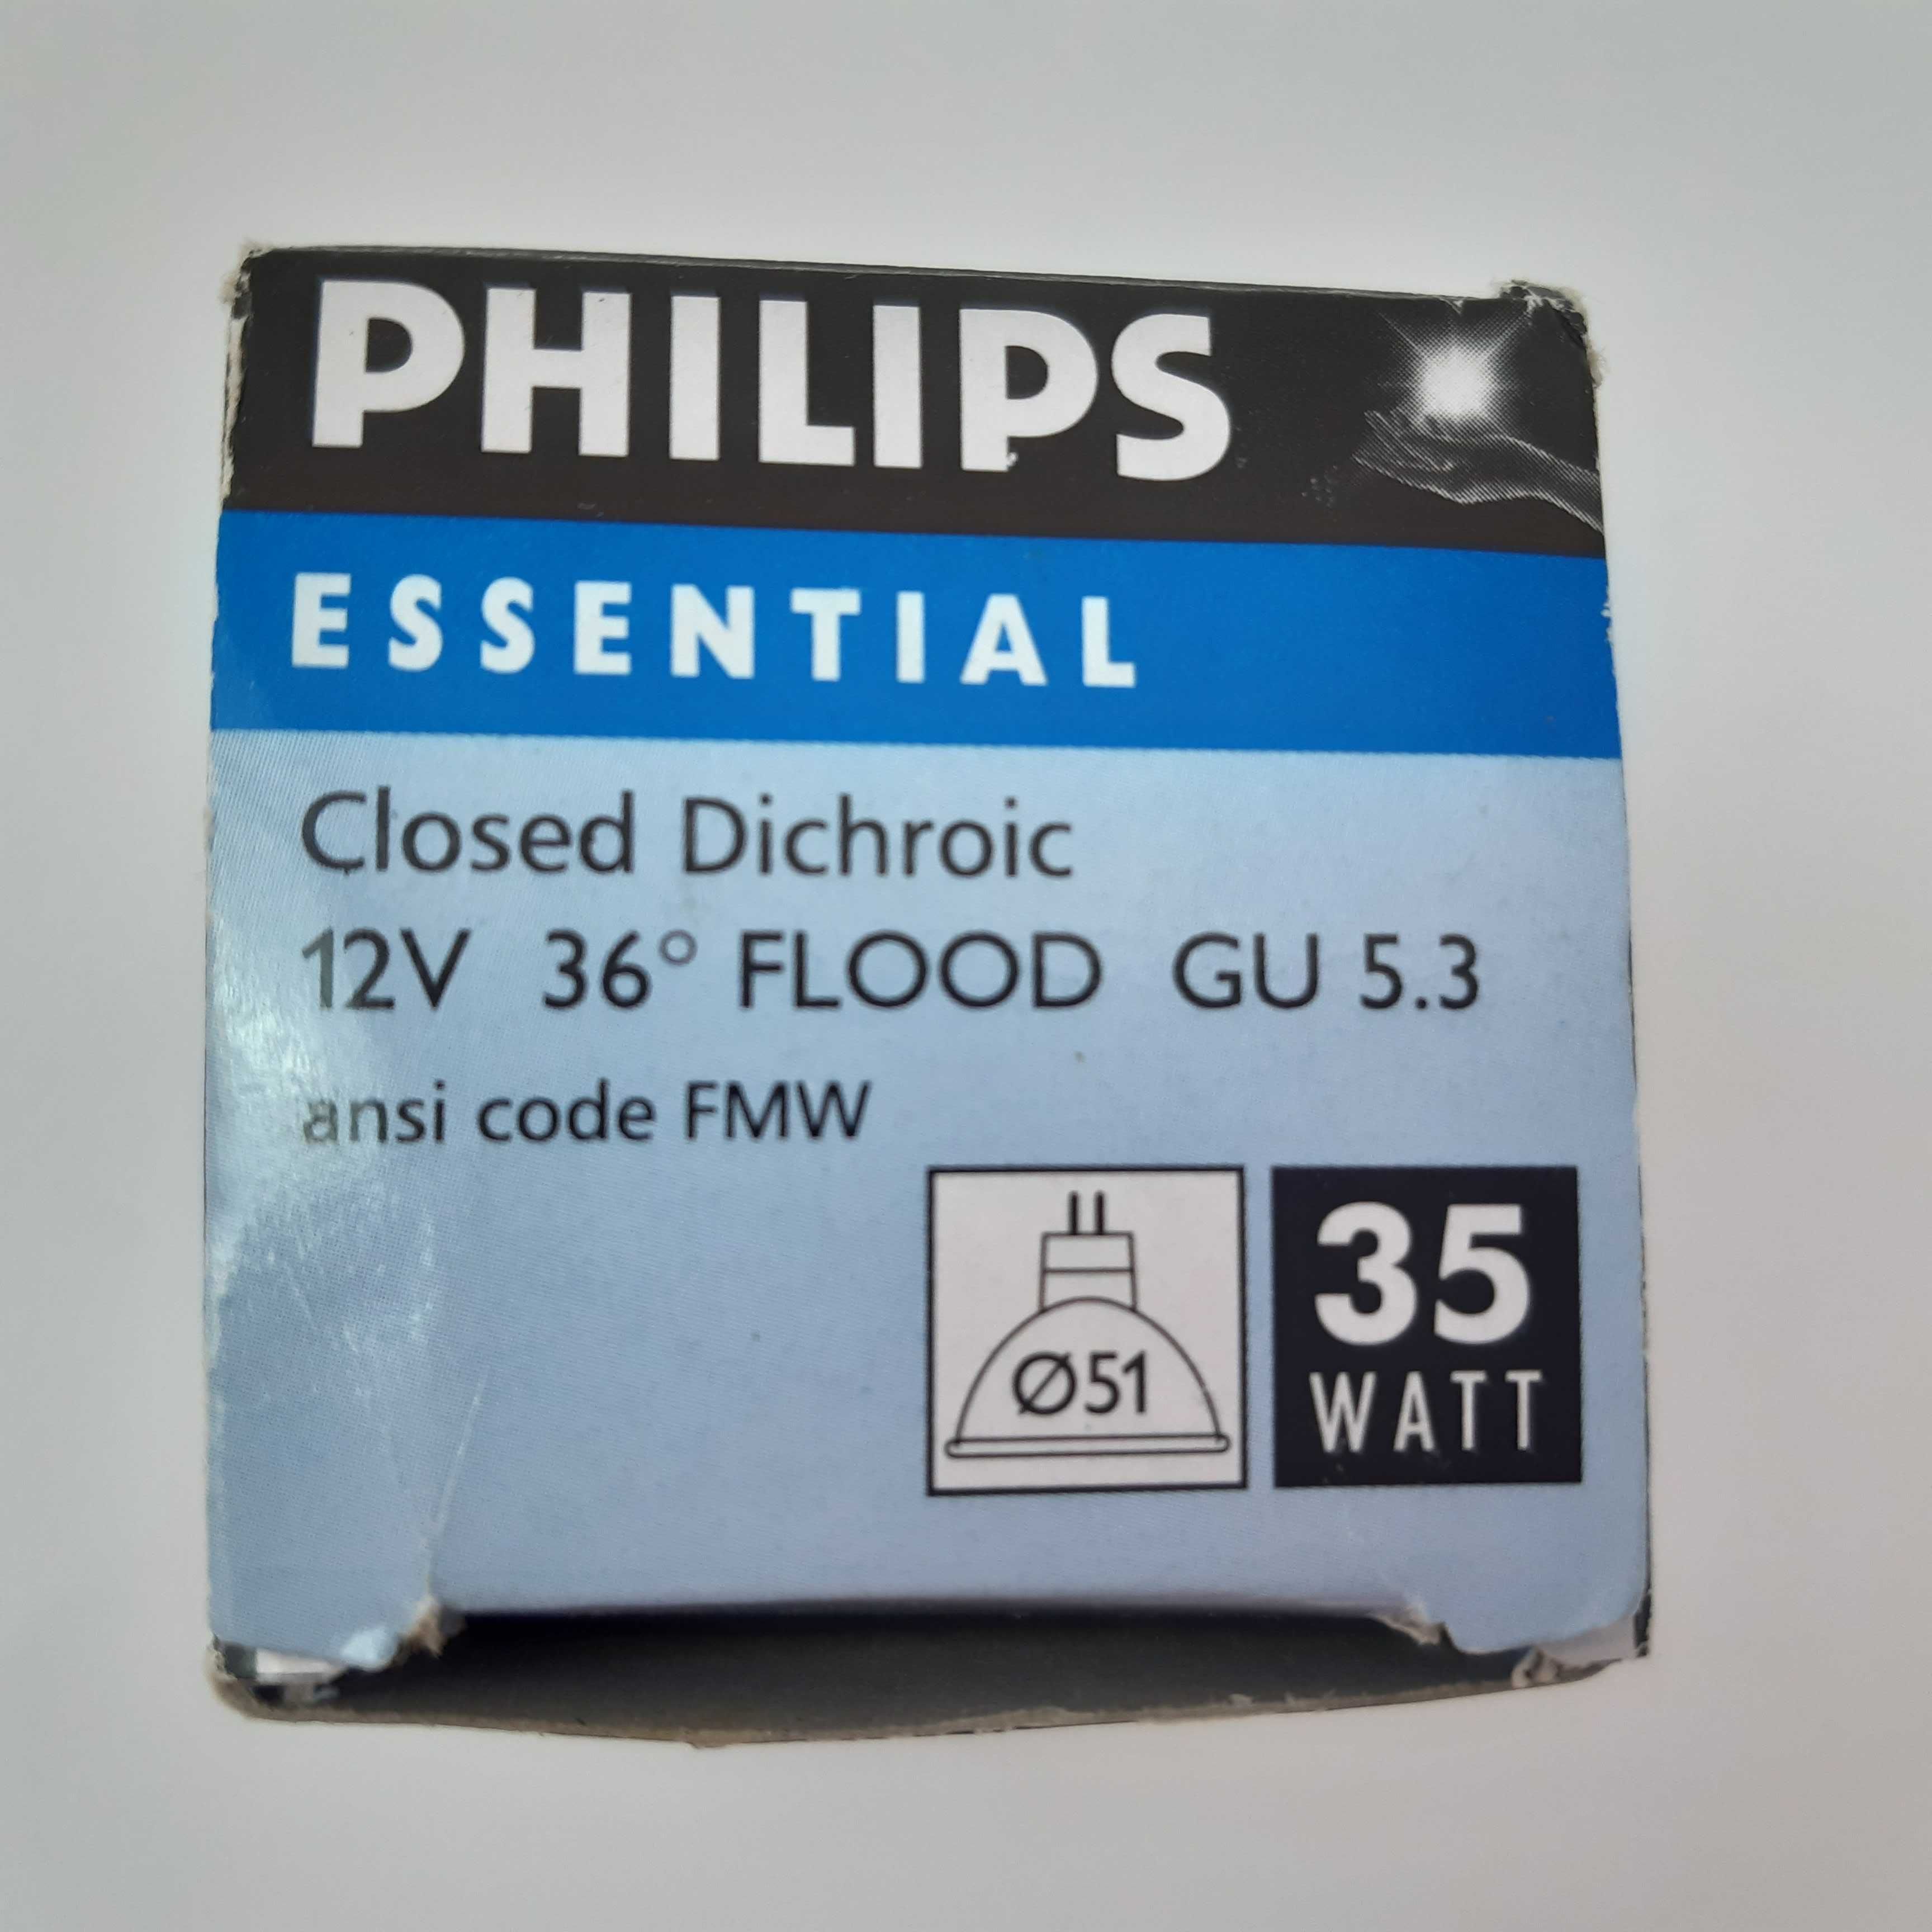 Żarówka halogenowūa Philips essential 12 V 36 st. Flood GU 5,3